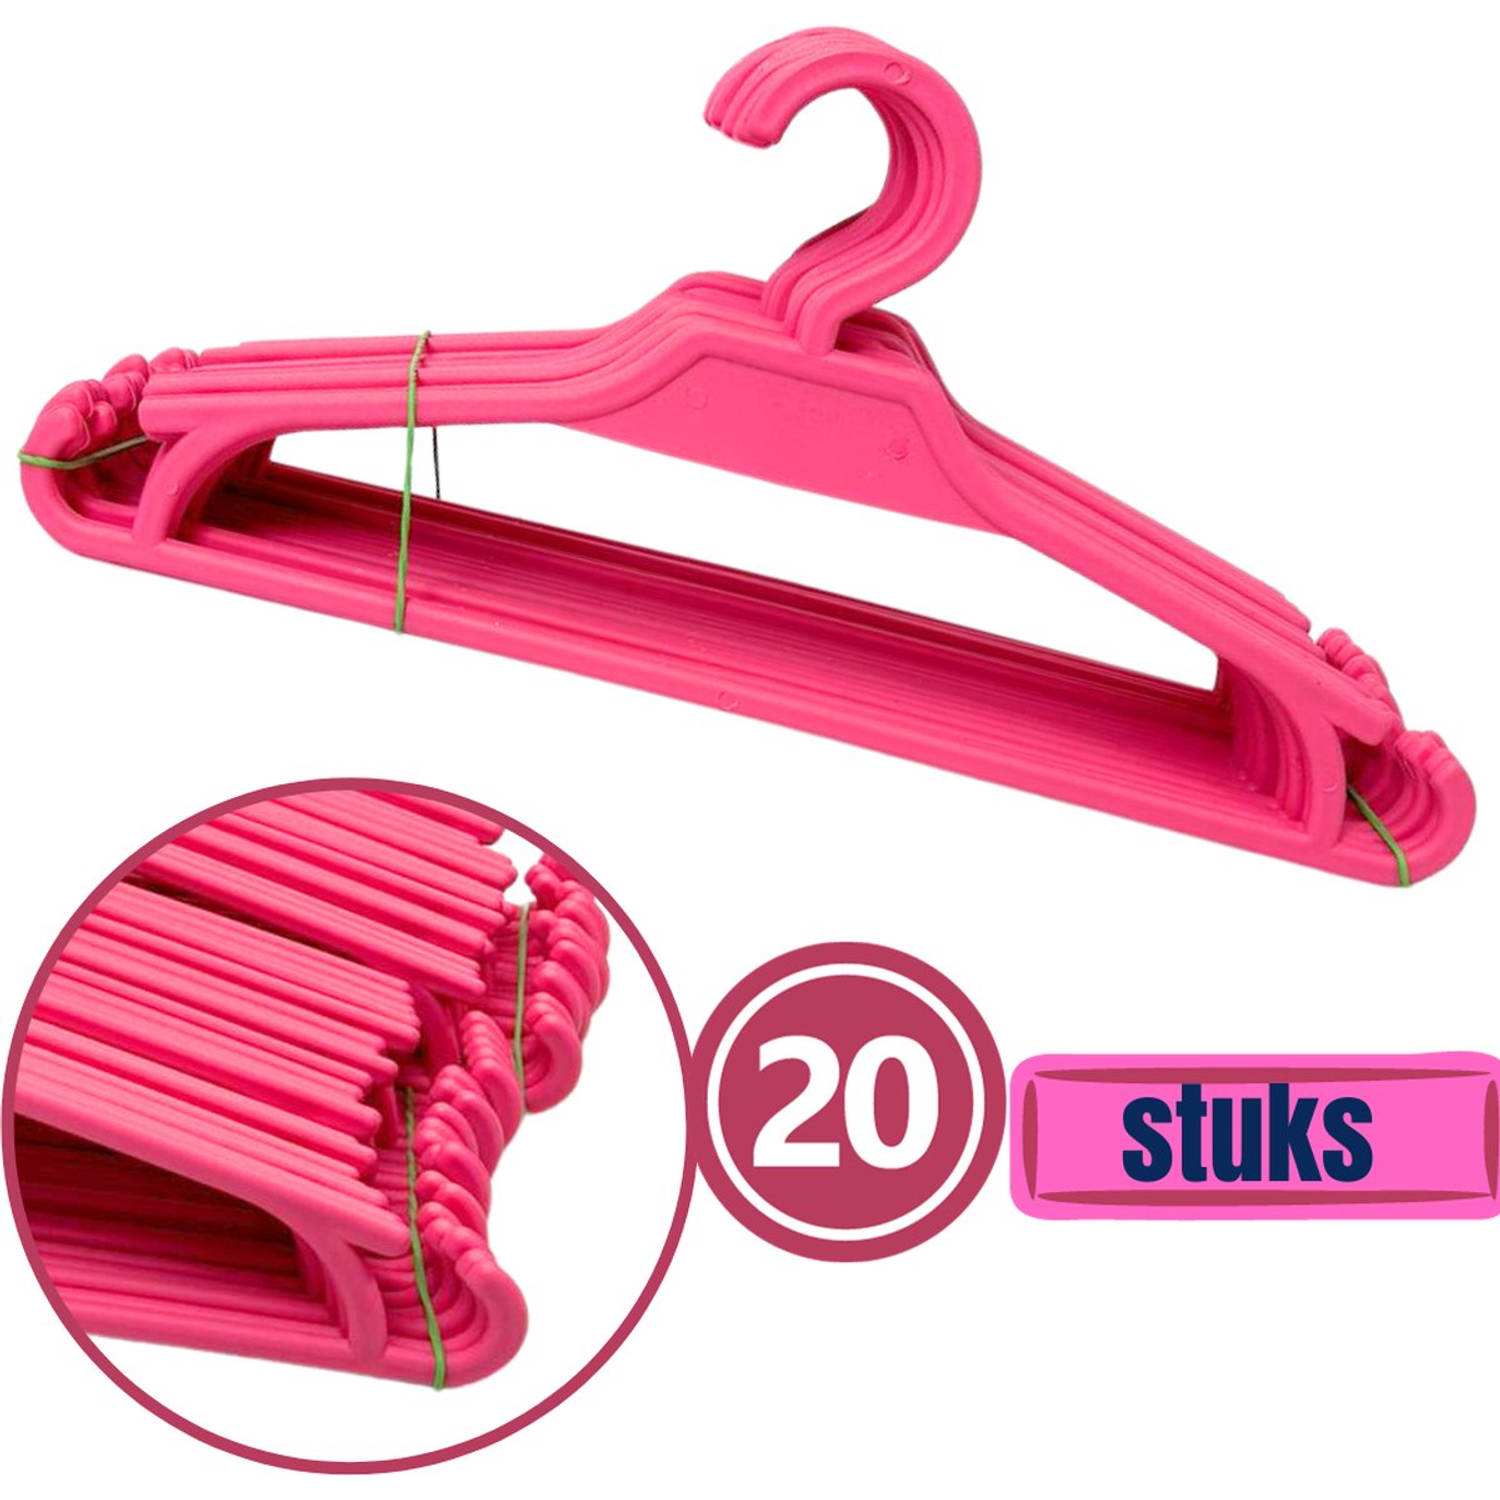 Synx Tools Kinder Kledinghangers - Kleerhangers - 20 stuks - Hanger - roze kleurenMix - kledinghangers baby - kinderkleding hangers - Babykleding - babykameraccessoires - 18CM-28CM